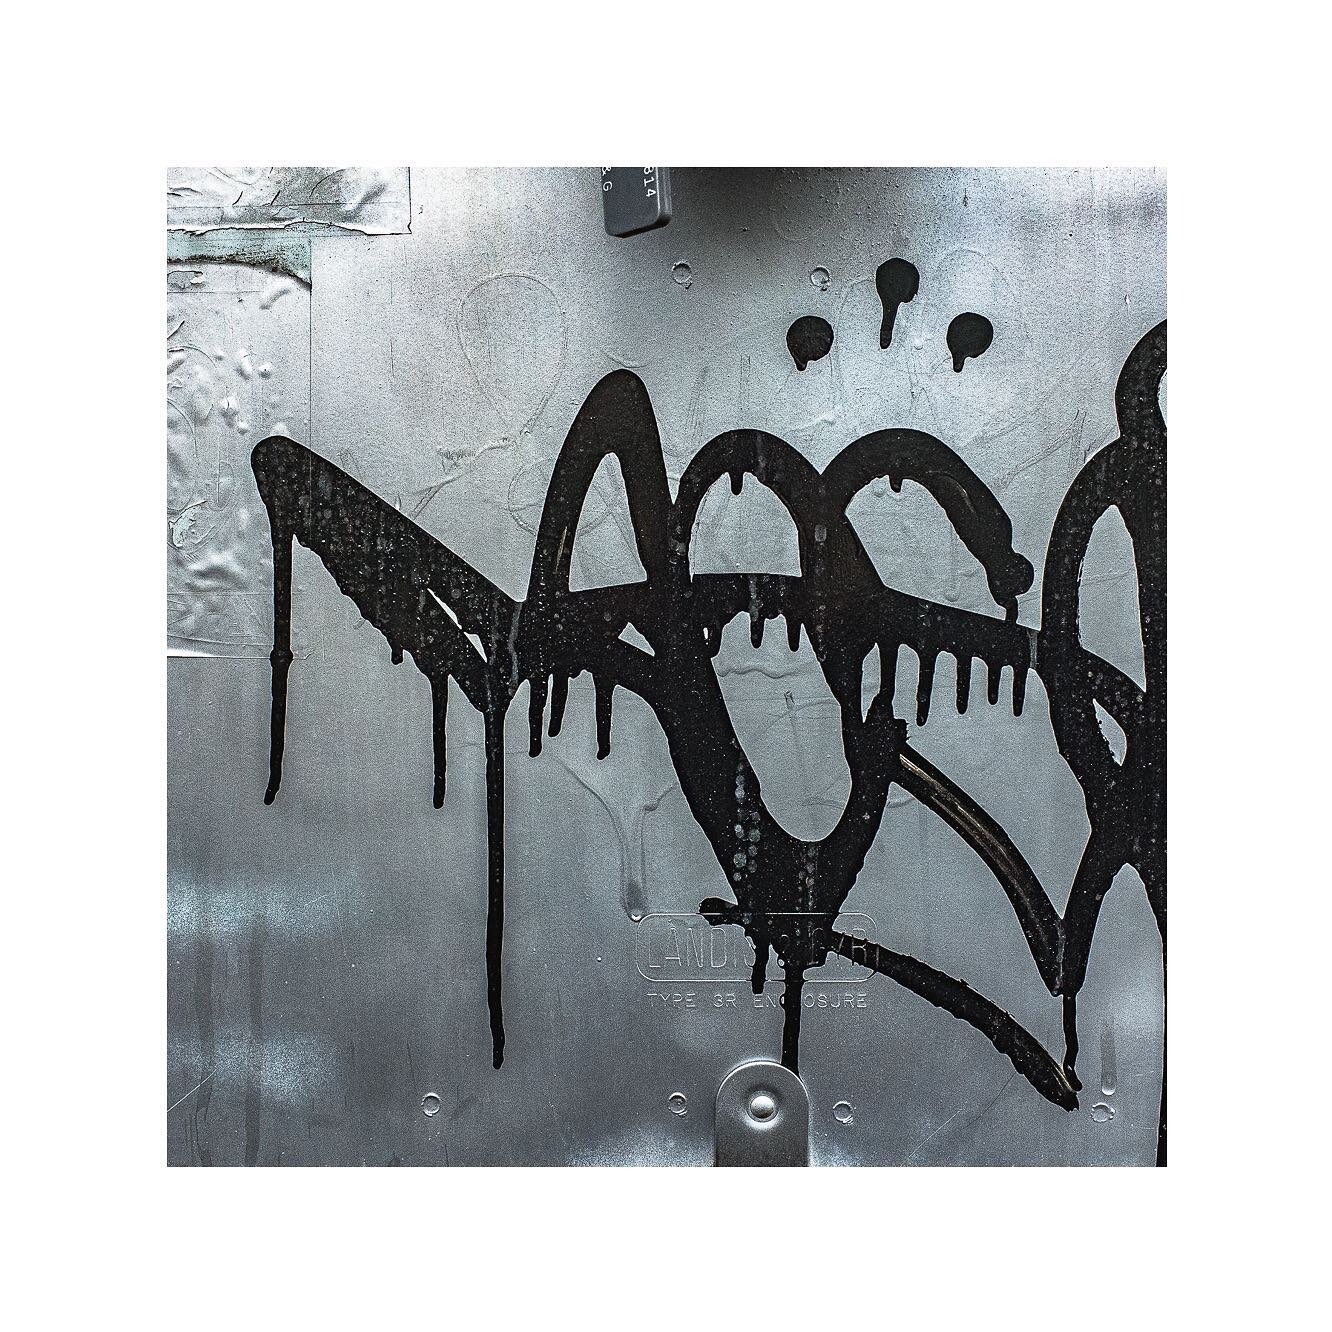 Mop Tag
February 15, 2016
📷: Ricoh GRD

:
:
:
:
:

#moptag #graffiti #tag #streetart #drips #silver #blackdrippypaint #speedart #charleston #ricoh #ricohgrd #streetphotography #throwbackthursday #tbt #latergram #reflectivesurface #quicksilver #mopma